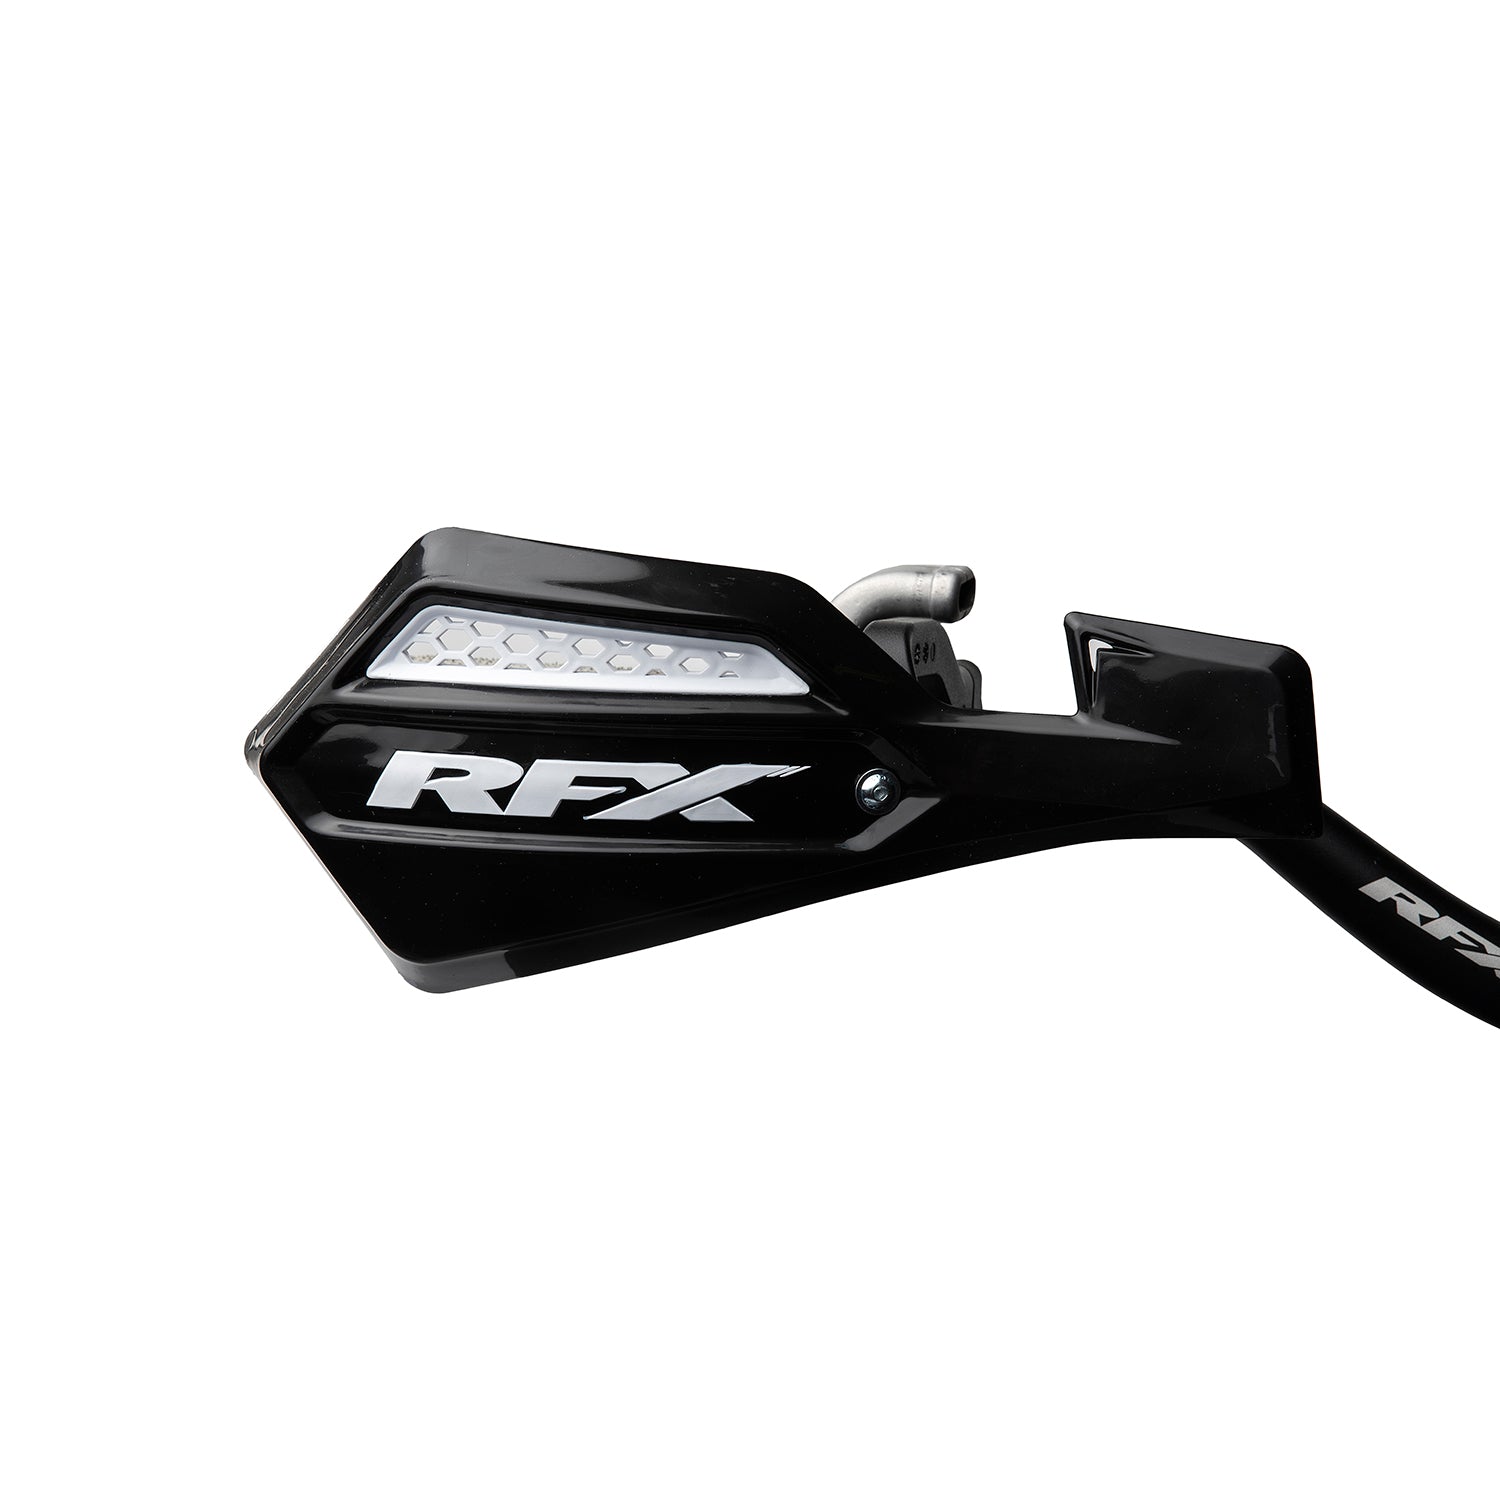 RFX 1 Series Handguards Black/White Inc Fitting Kit